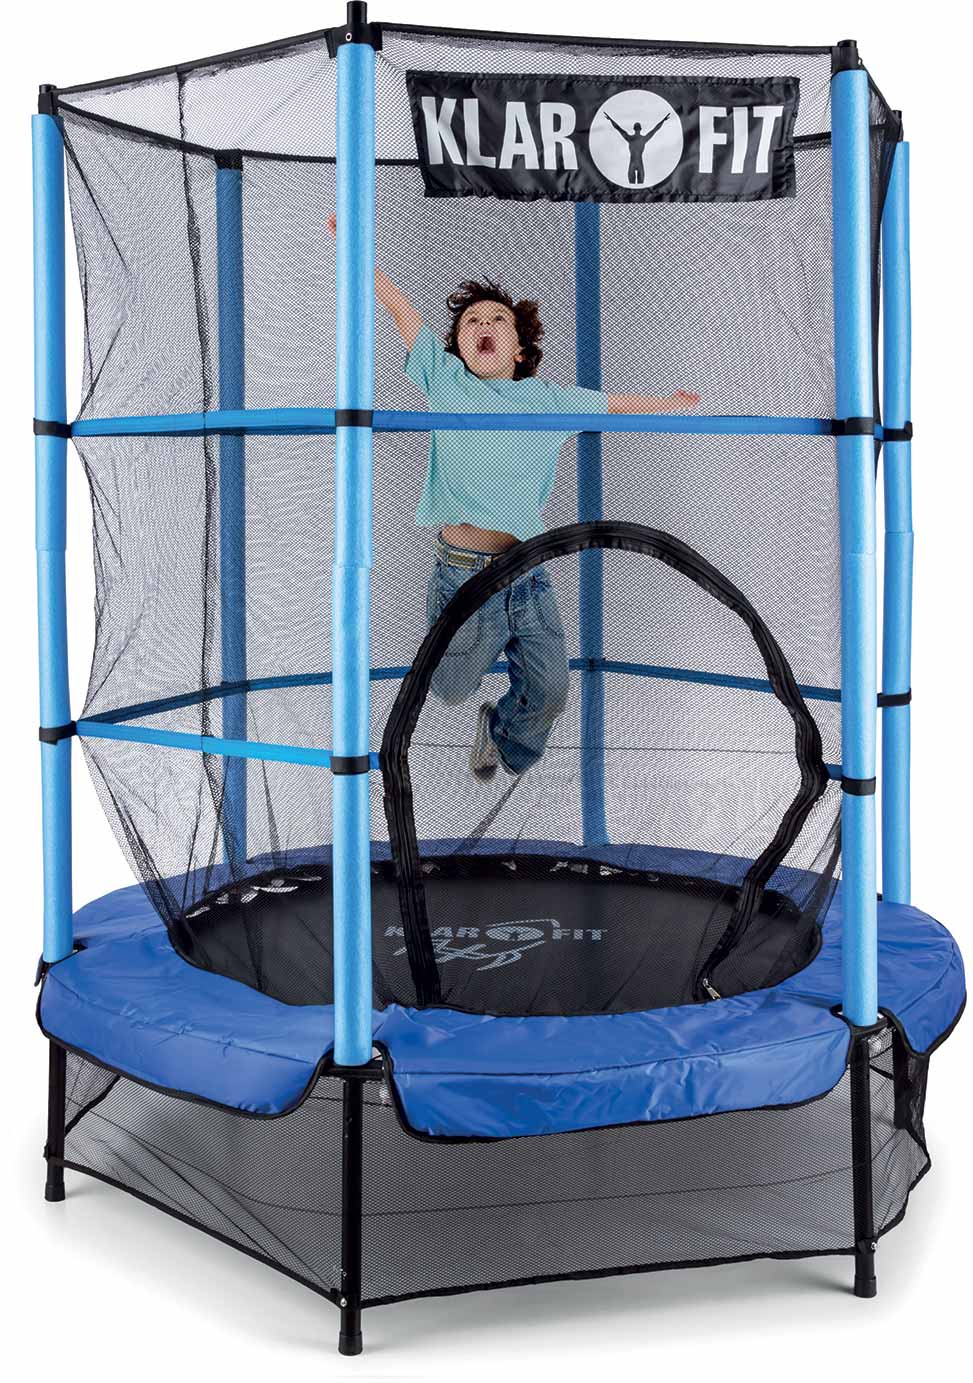 Kids’ trampoline